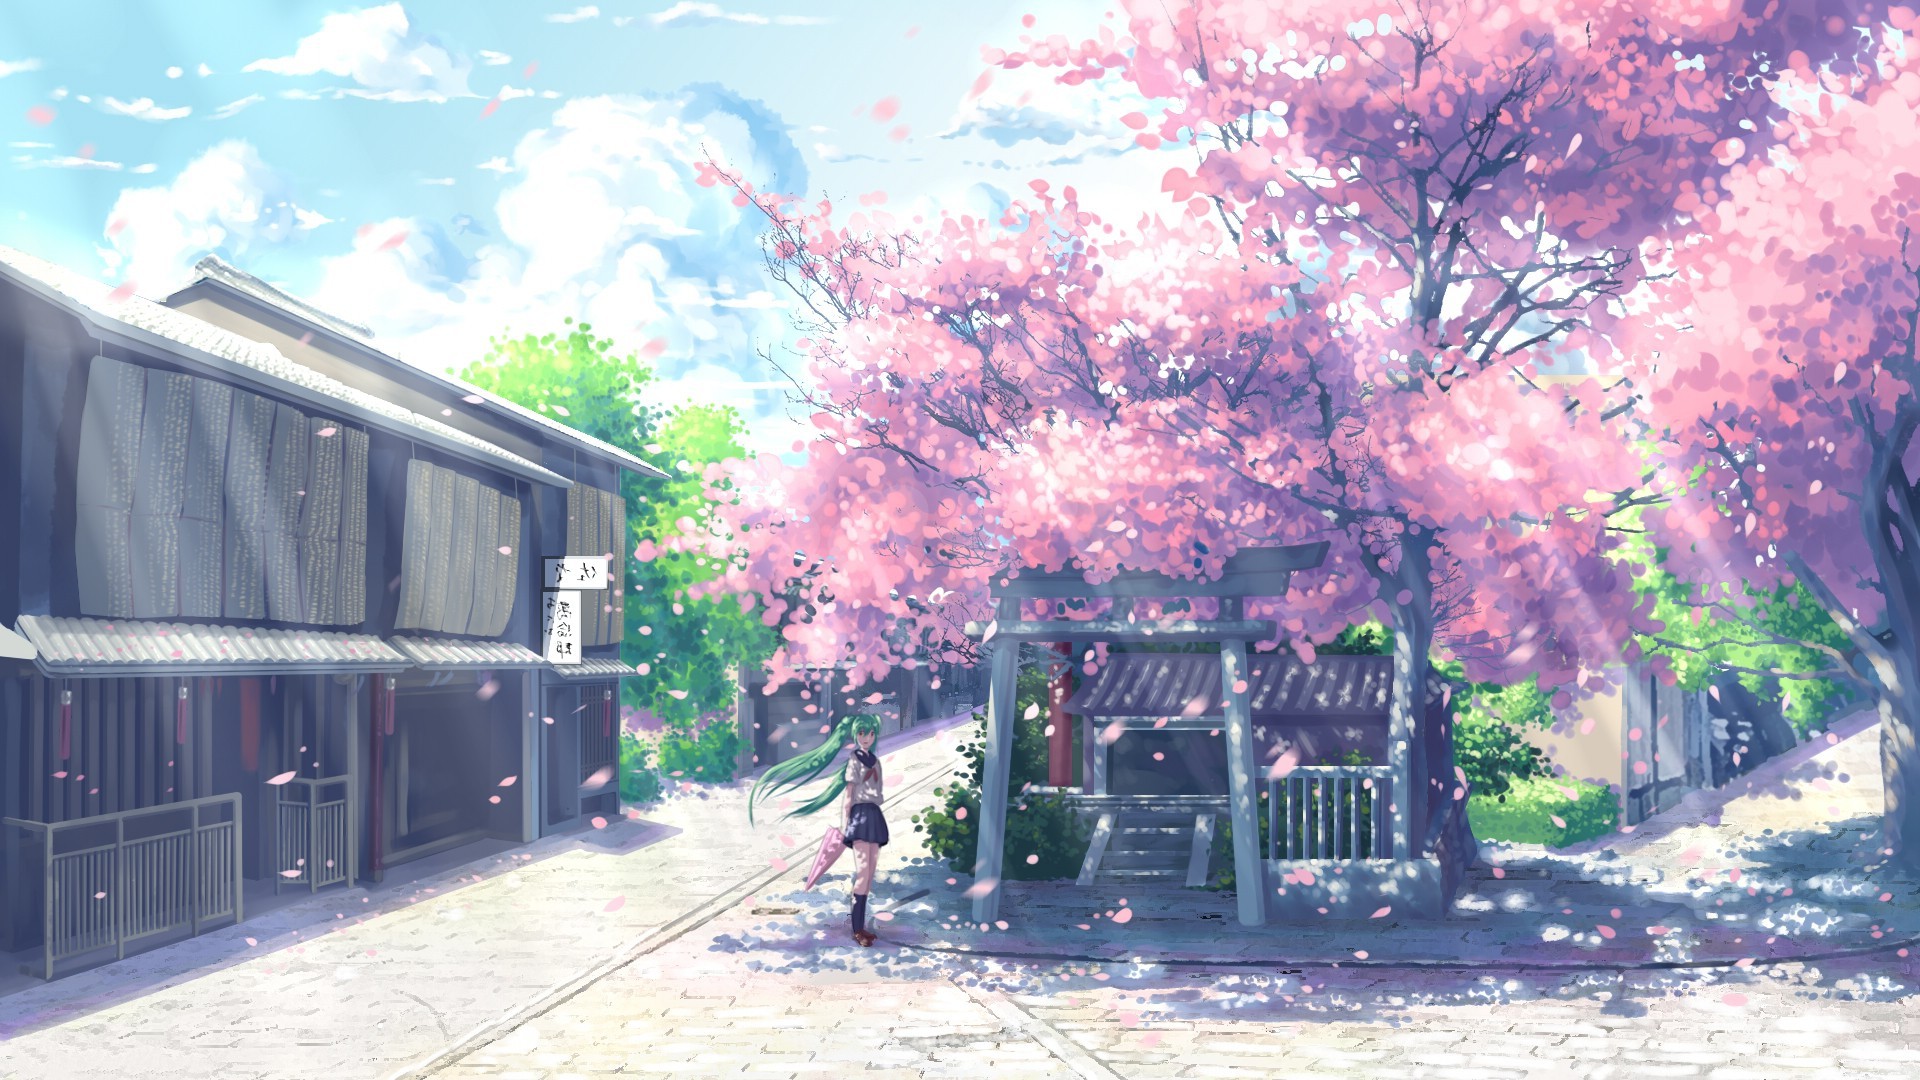 1920x1080 Anime Cherry Blossom HD Wallpaper. Anime Cherry Blossom Hi Res .